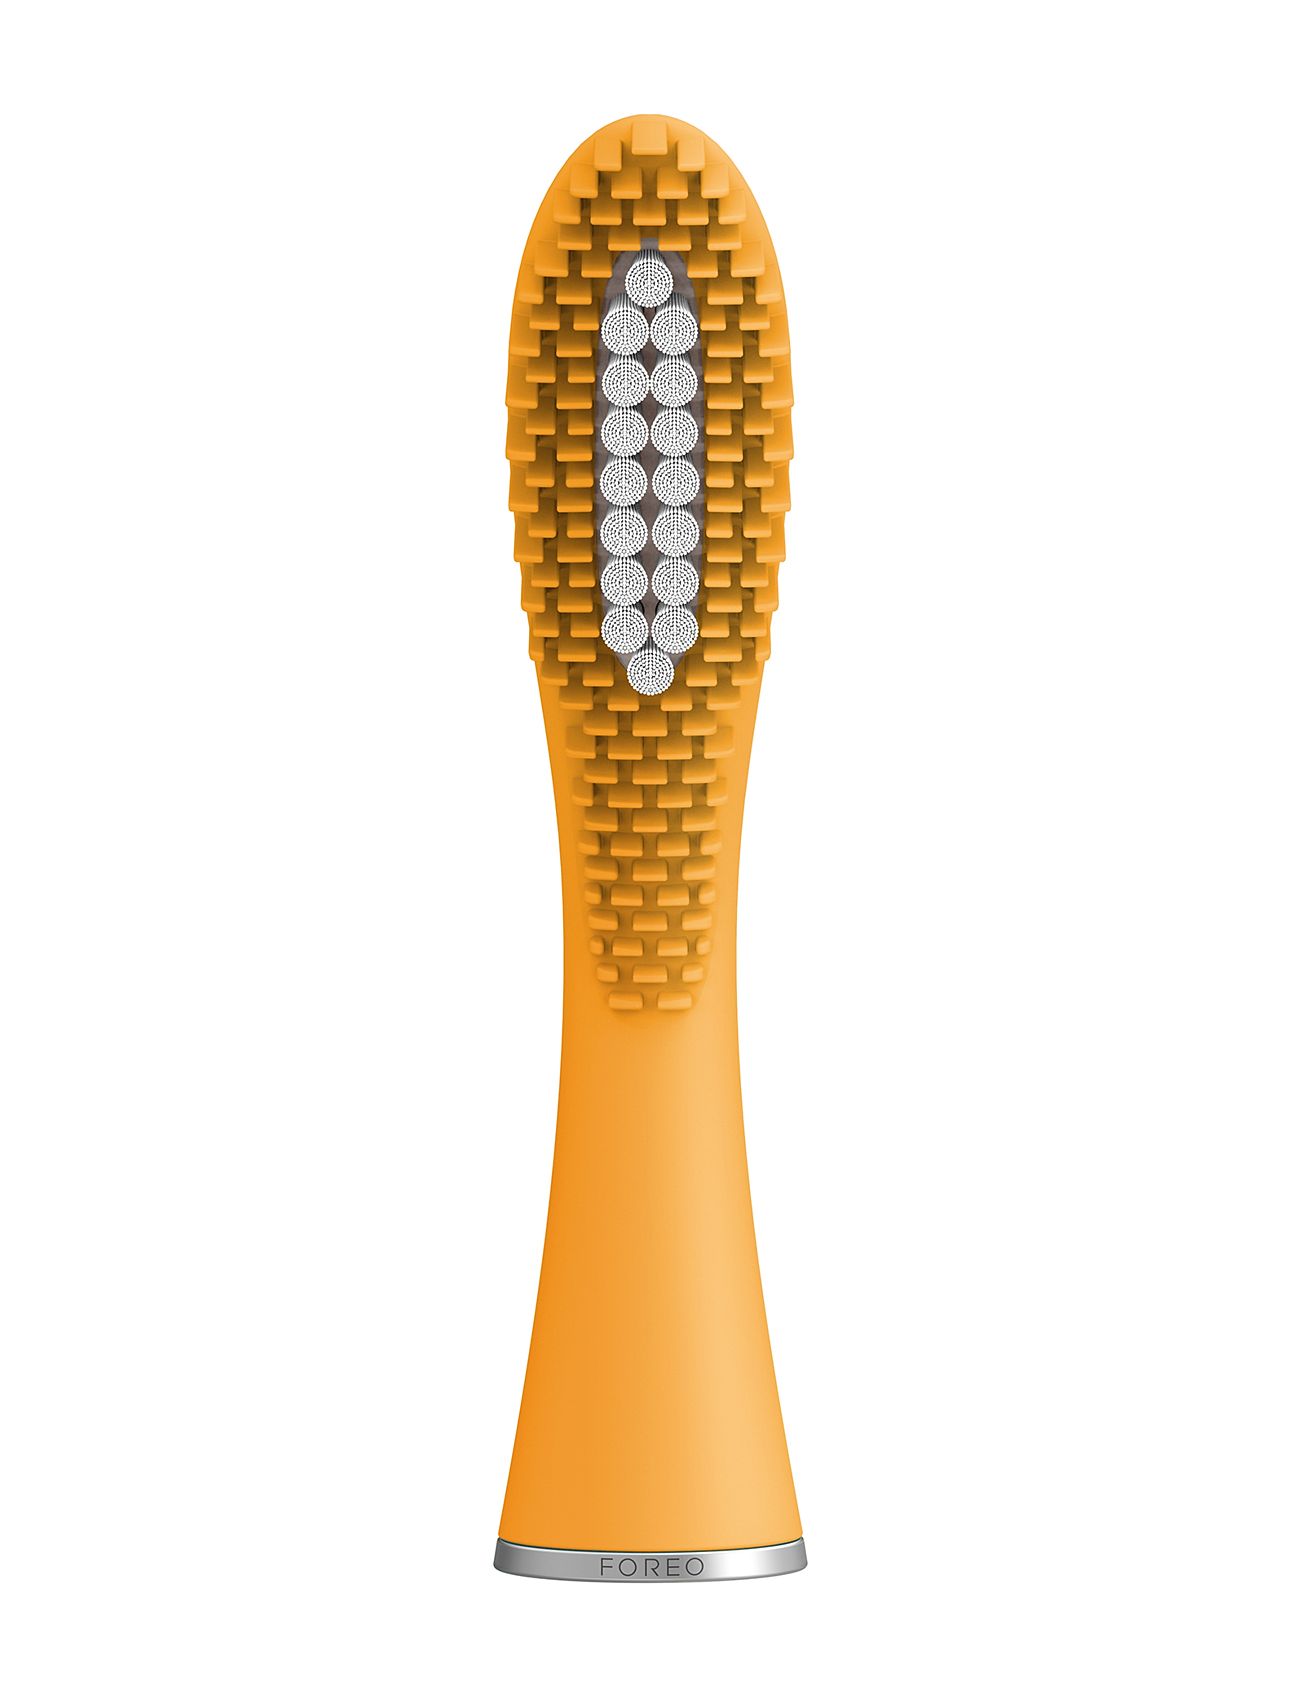 Issa™ Mini Hybrid Brush Head Beauty Women Home Oral Hygiene Toothbrushes Yellow Foreo